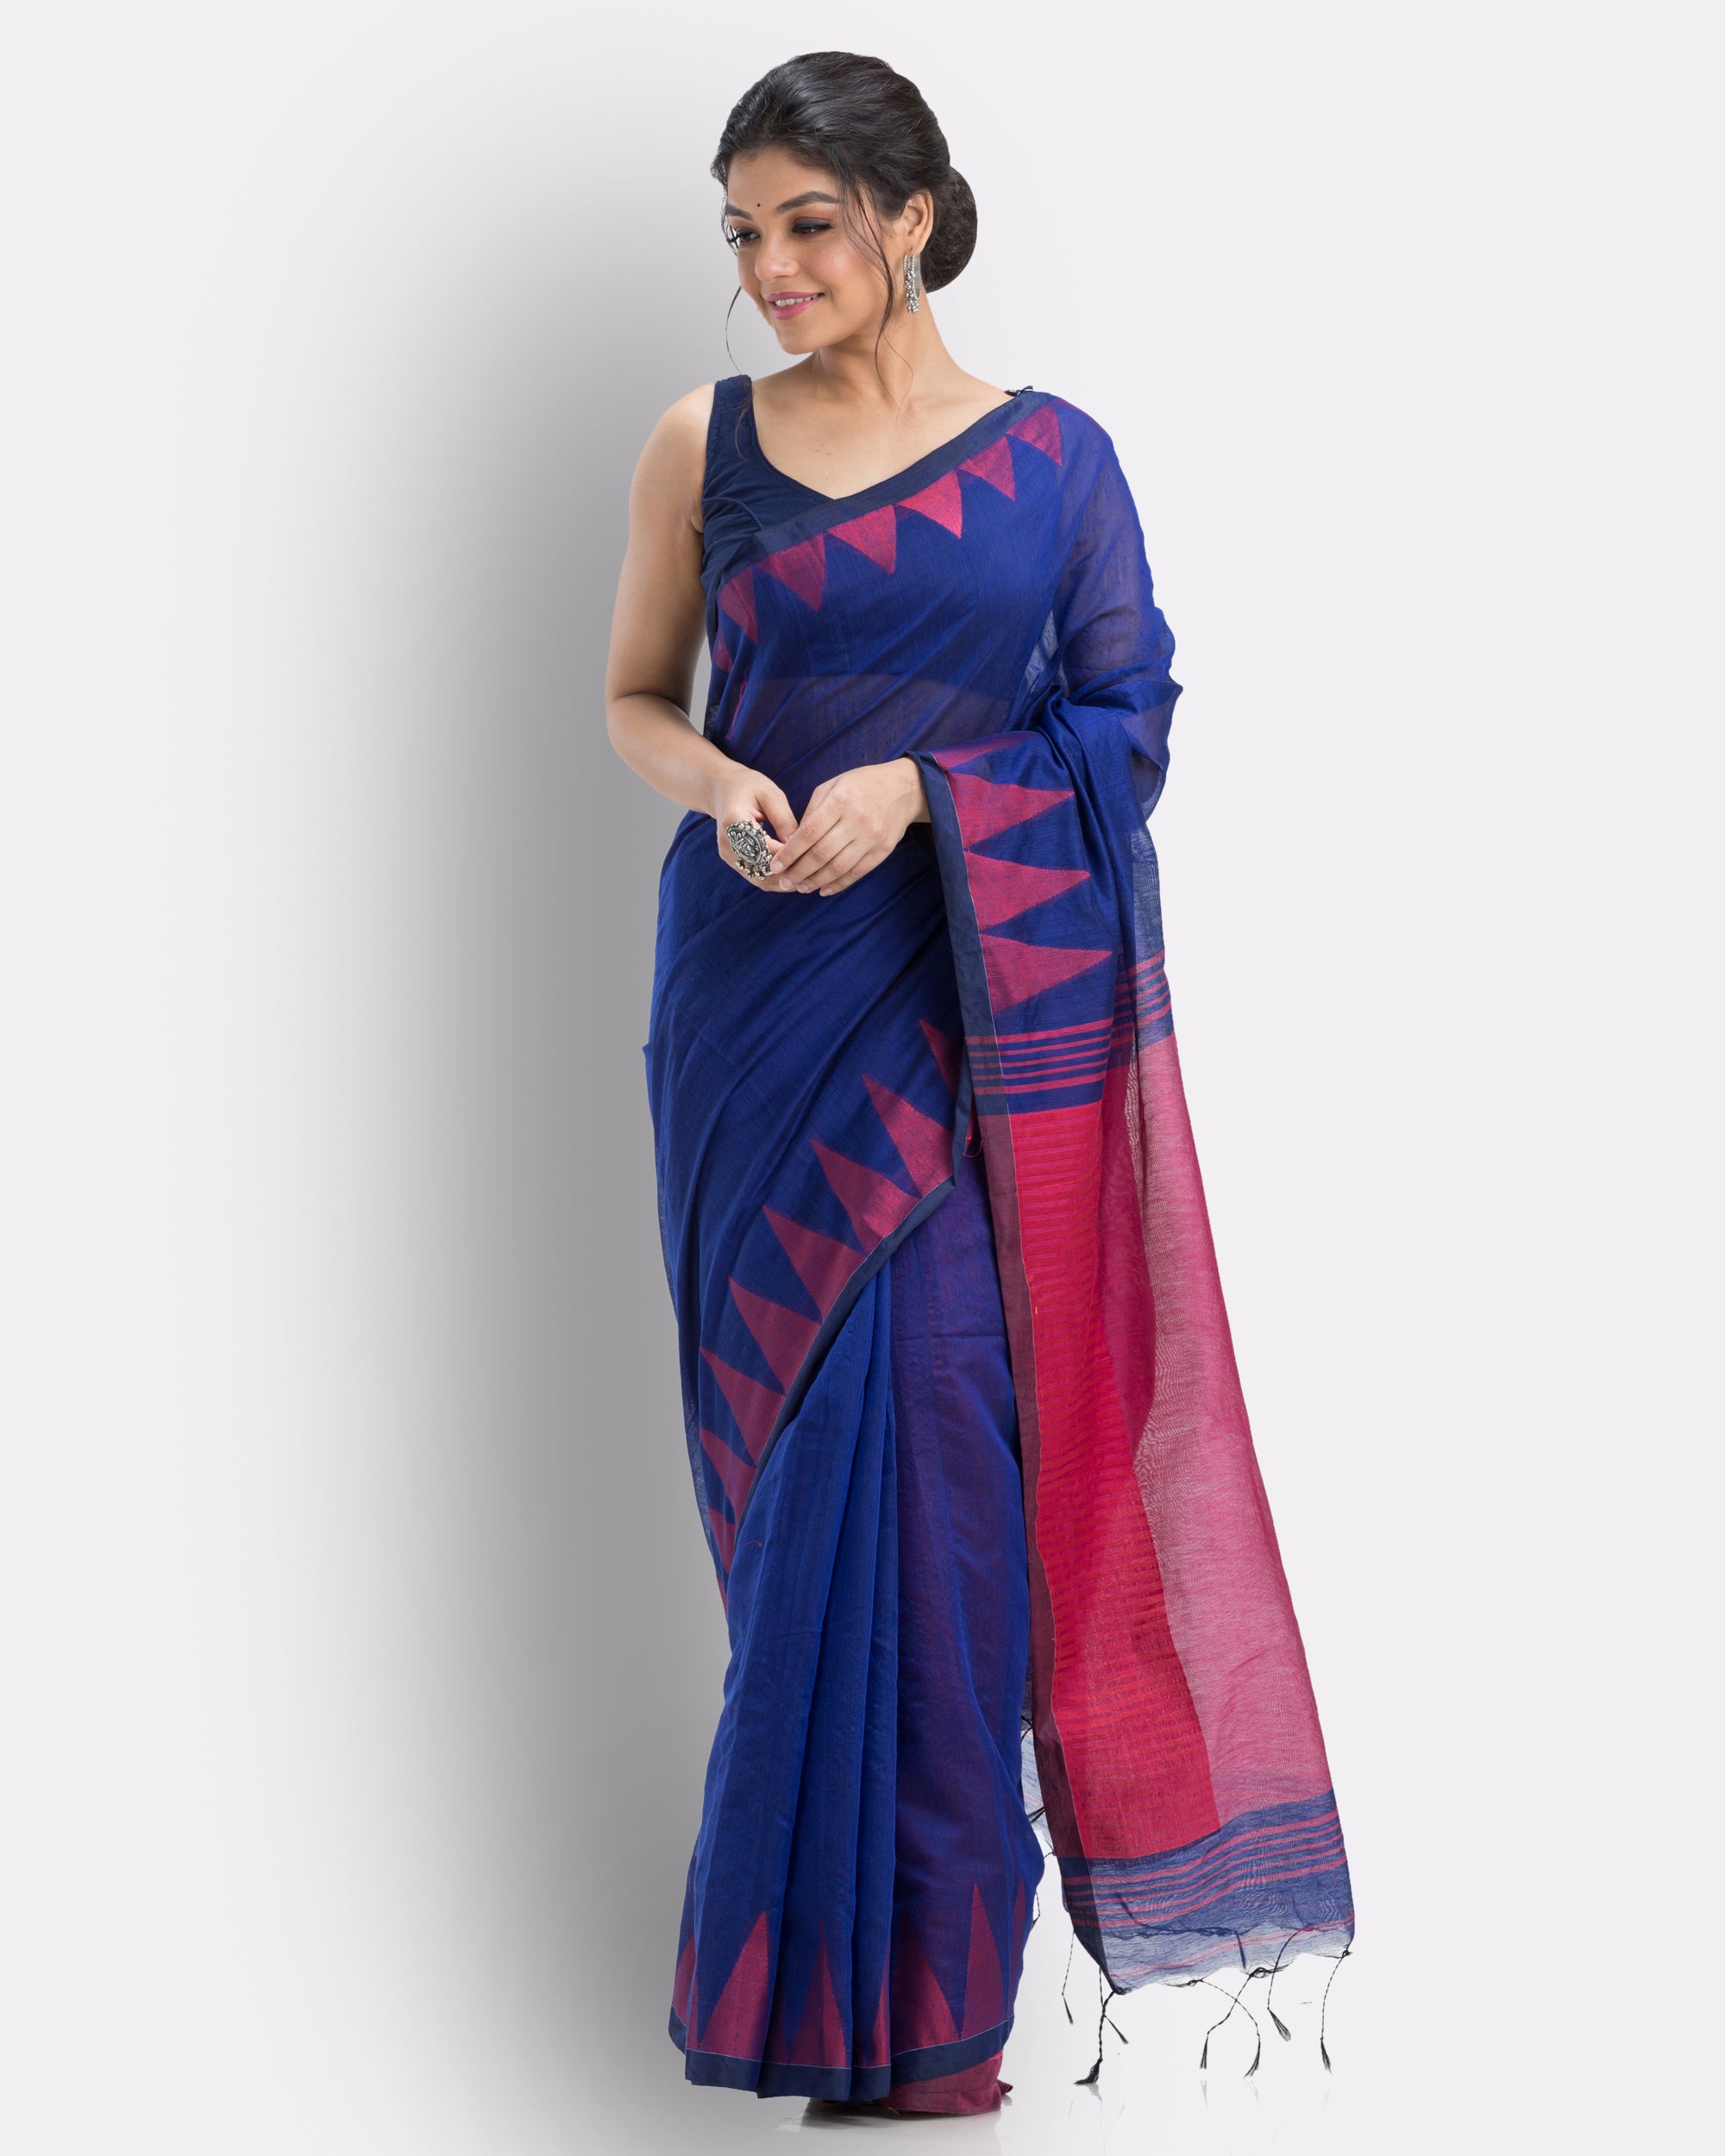 Women's Royel Blue Cotton Blend Handloom Saree - Piyari Fashion